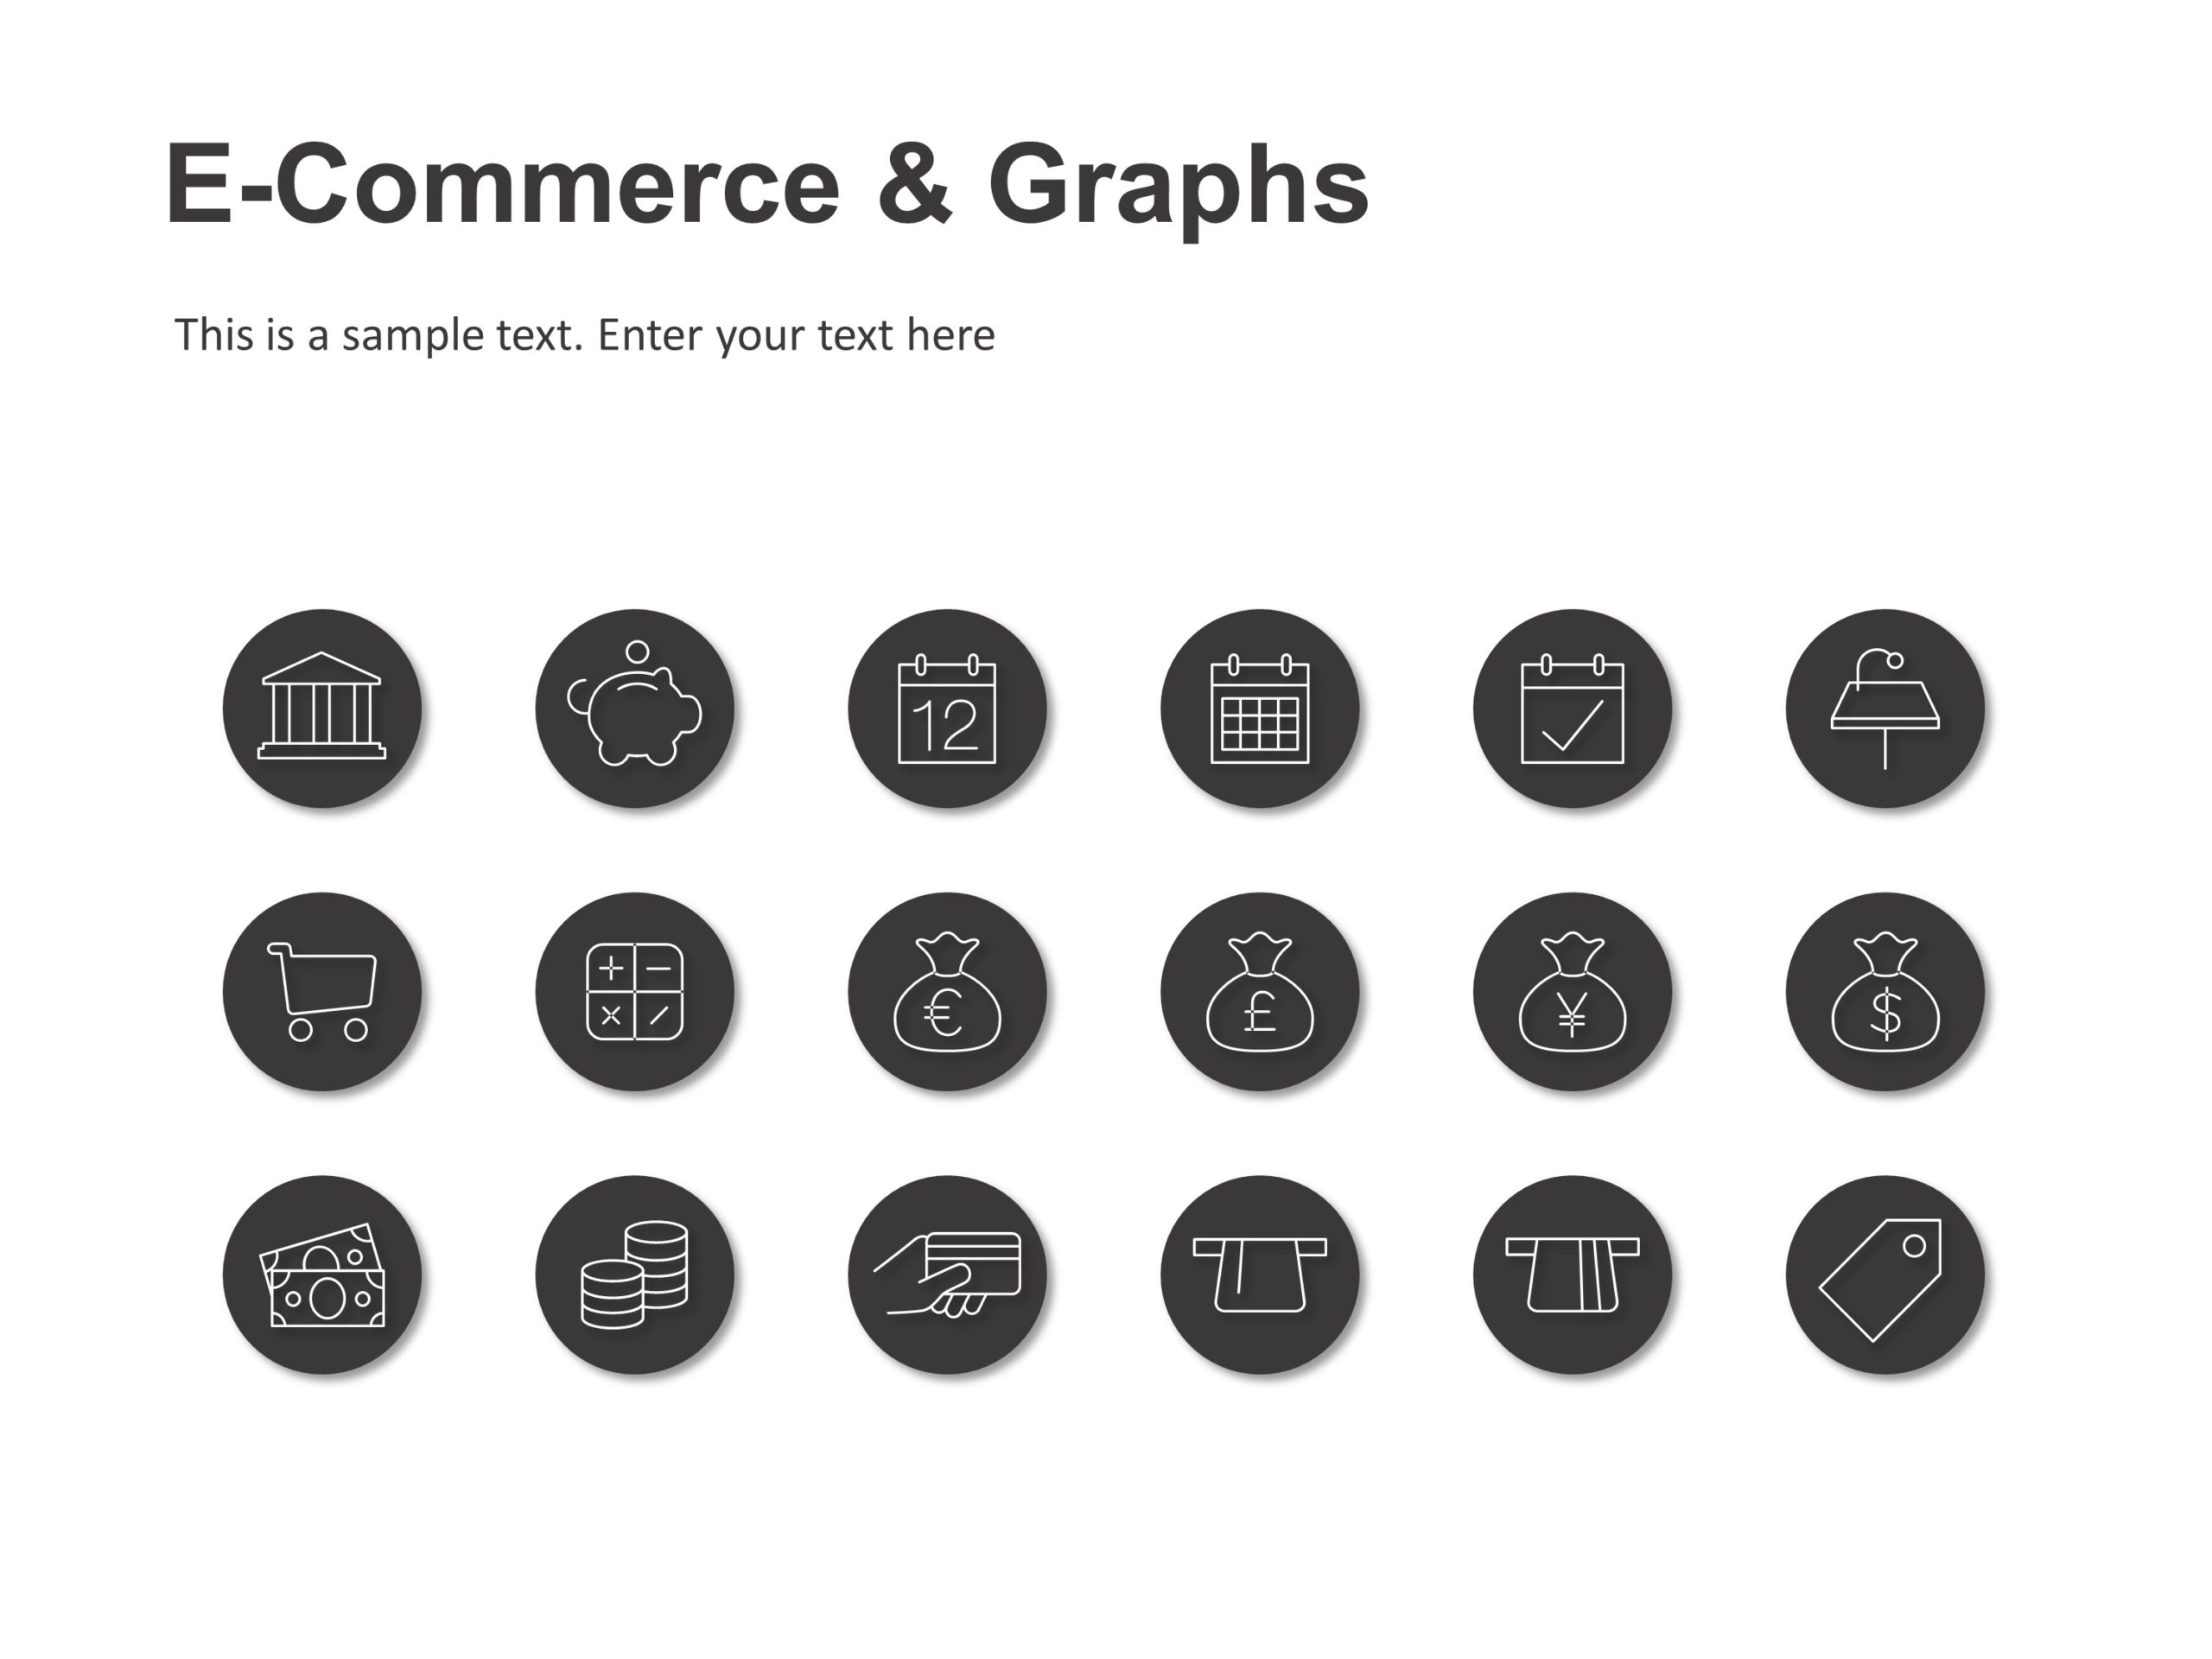 E-commerce & Graphs PowerPoint Template